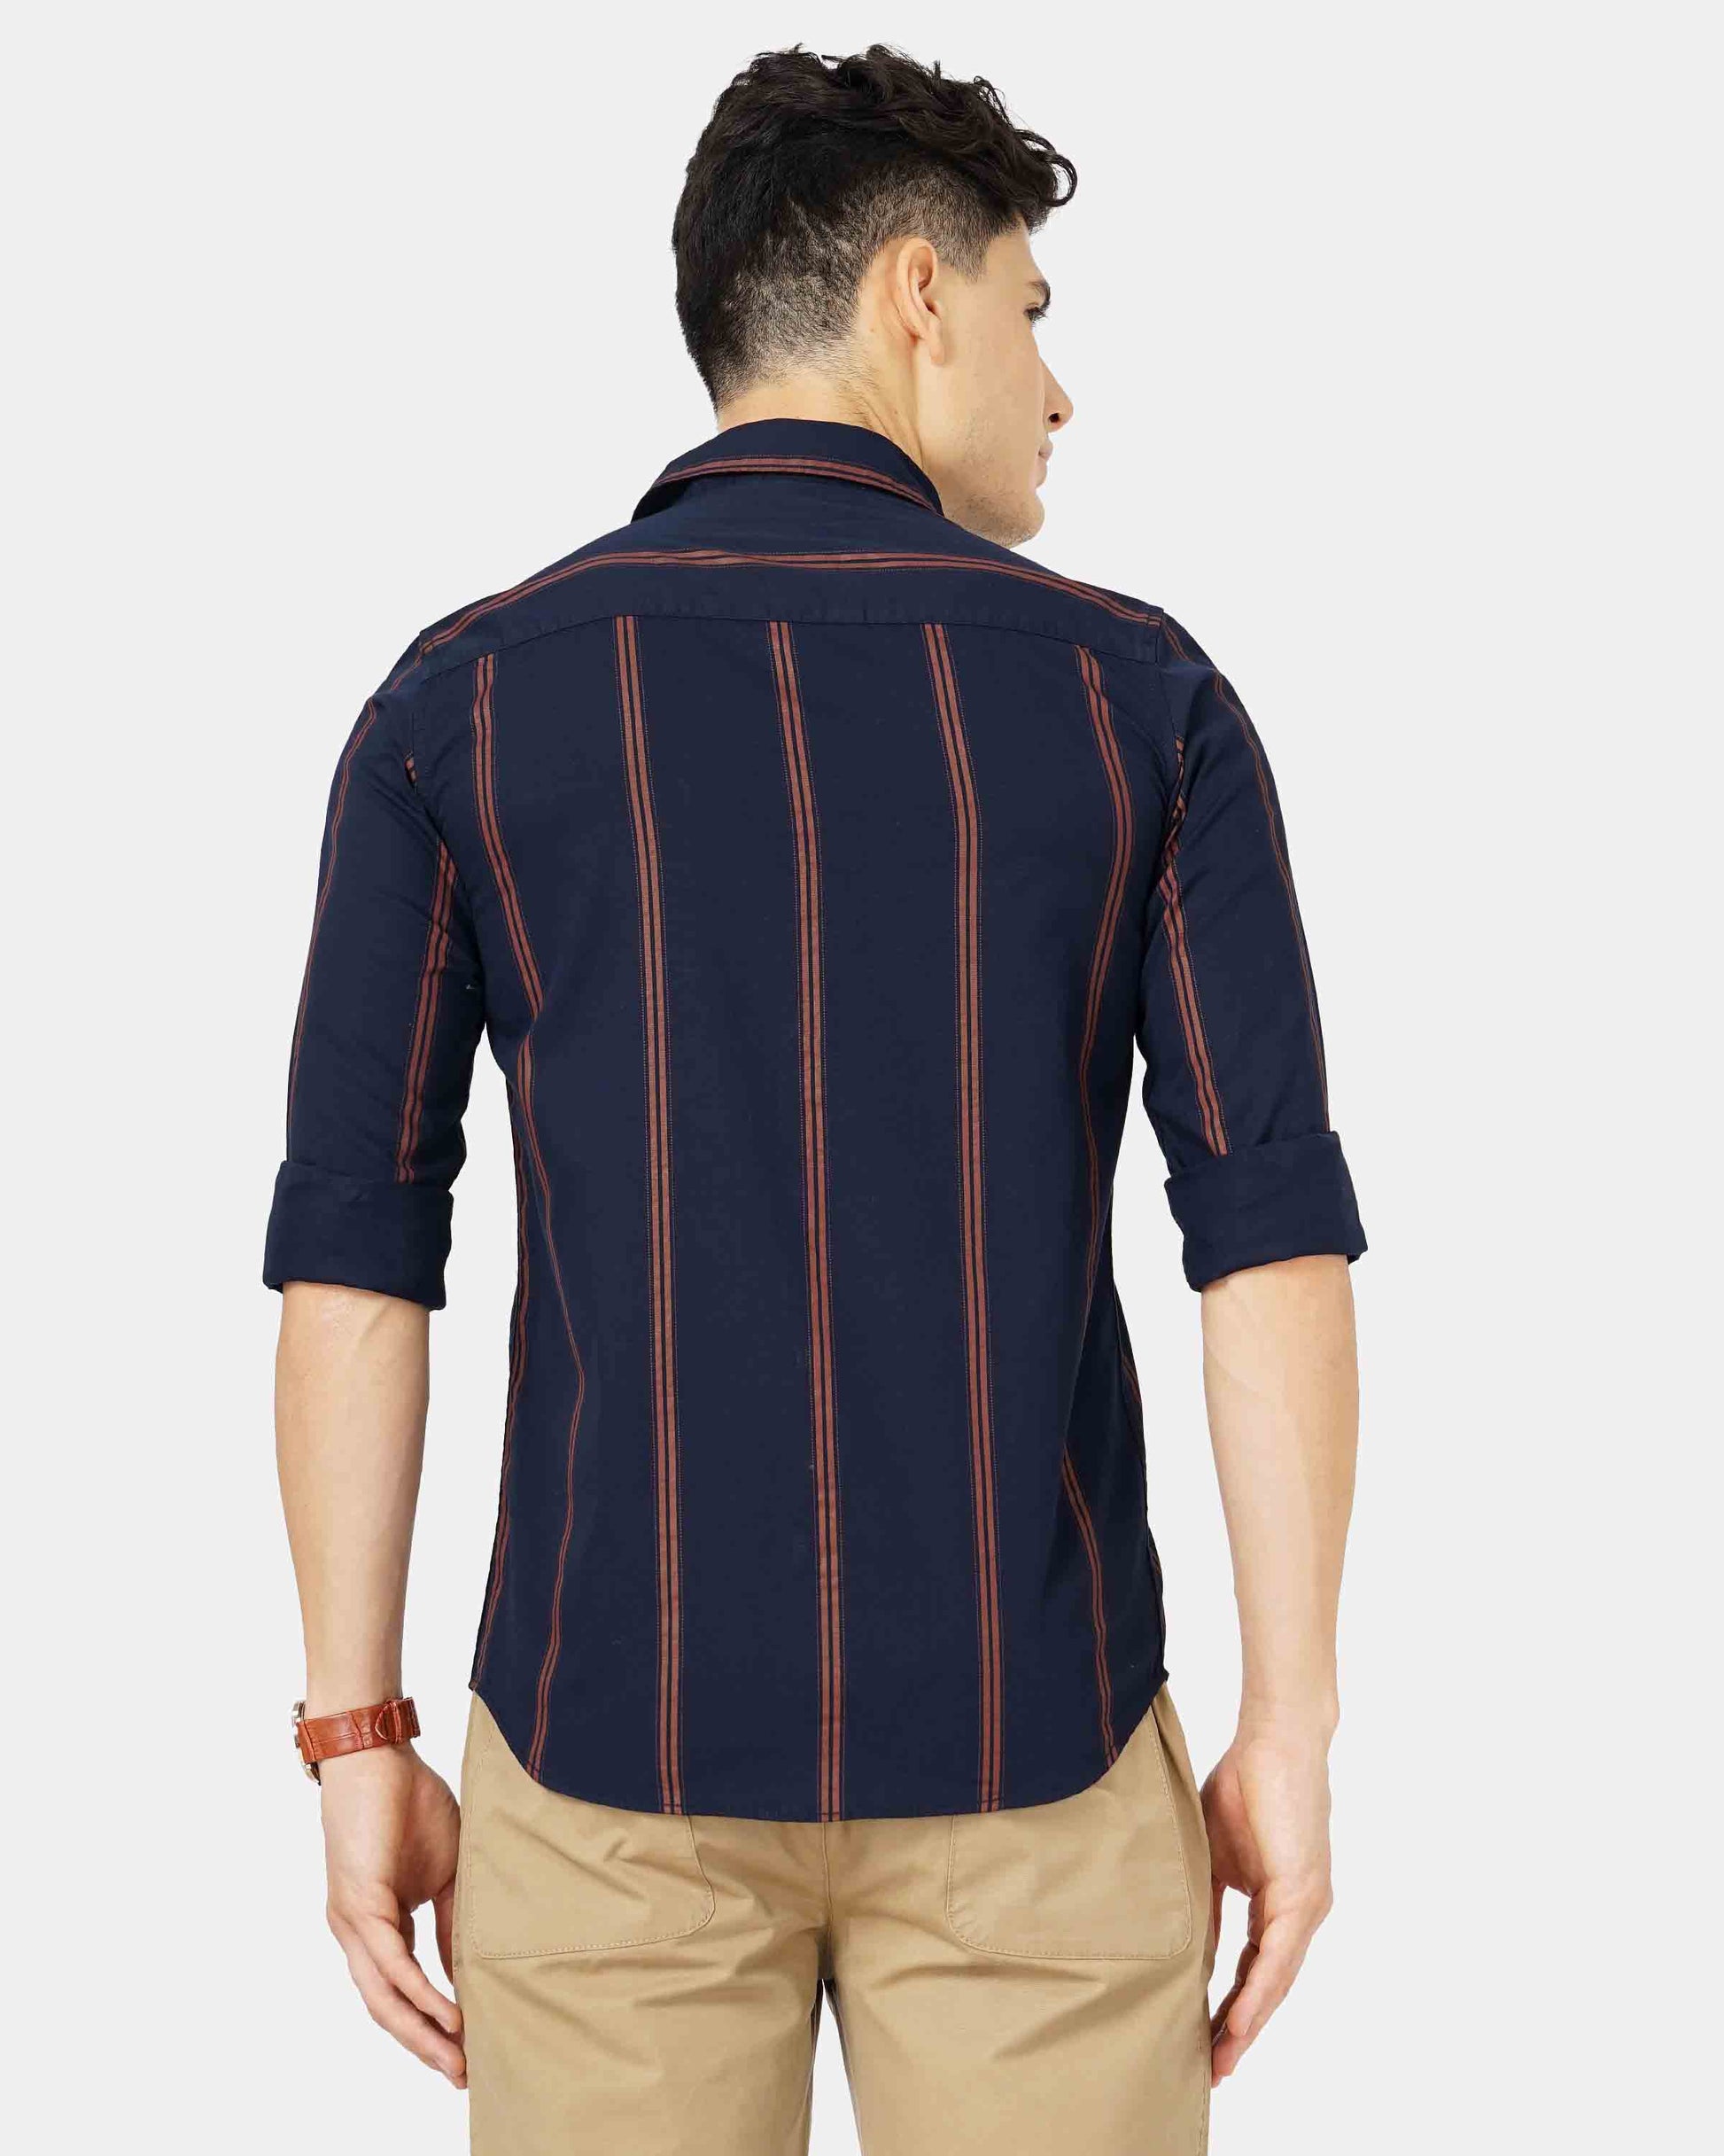 Navy & Peach Stripe Shirt